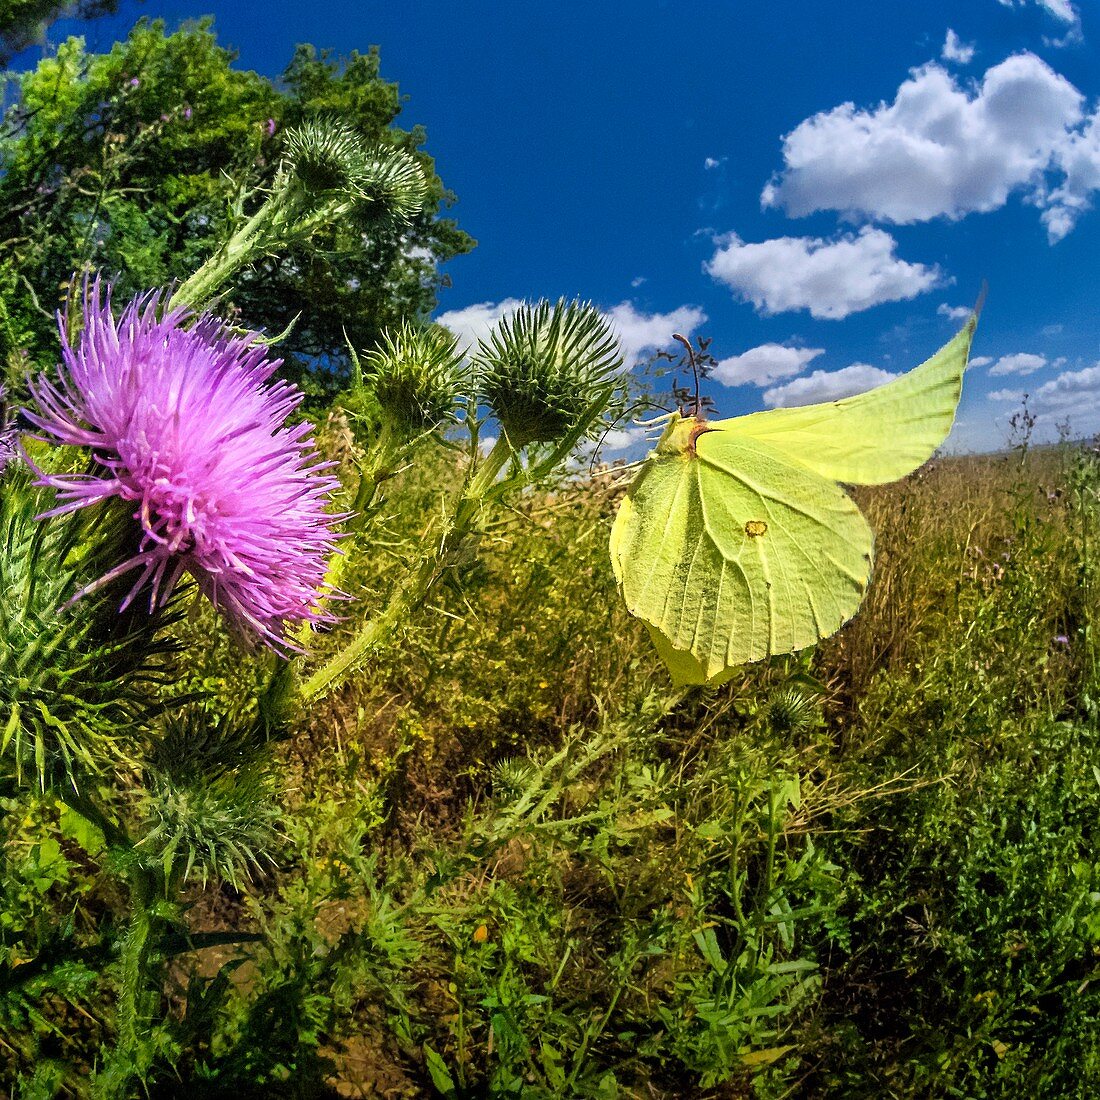 Brimstone butterfly, high-speed fish-eye lens image